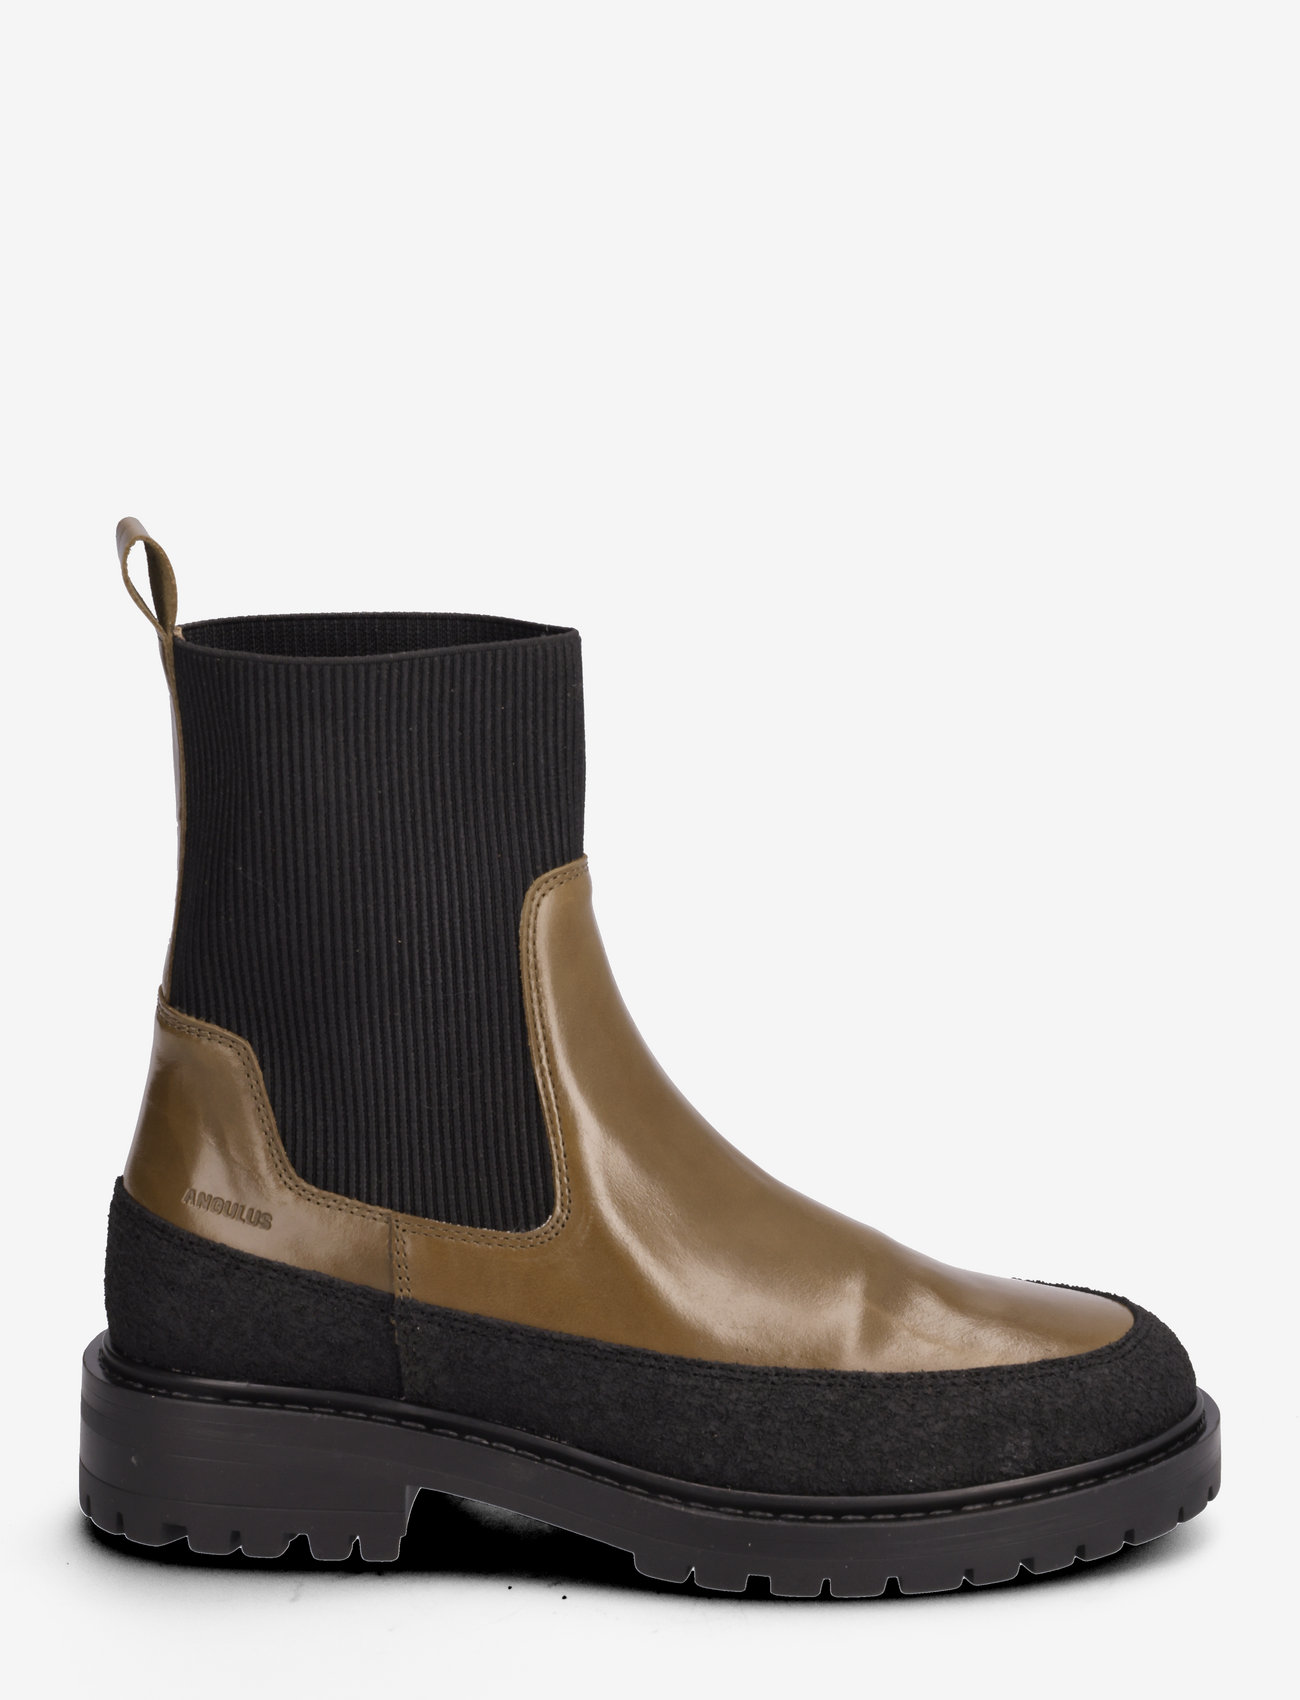 ANGULUS - Boots - flat - „chelsea“ stiliaus aulinukai - 1321/1841/019  black/d. oliven - 1